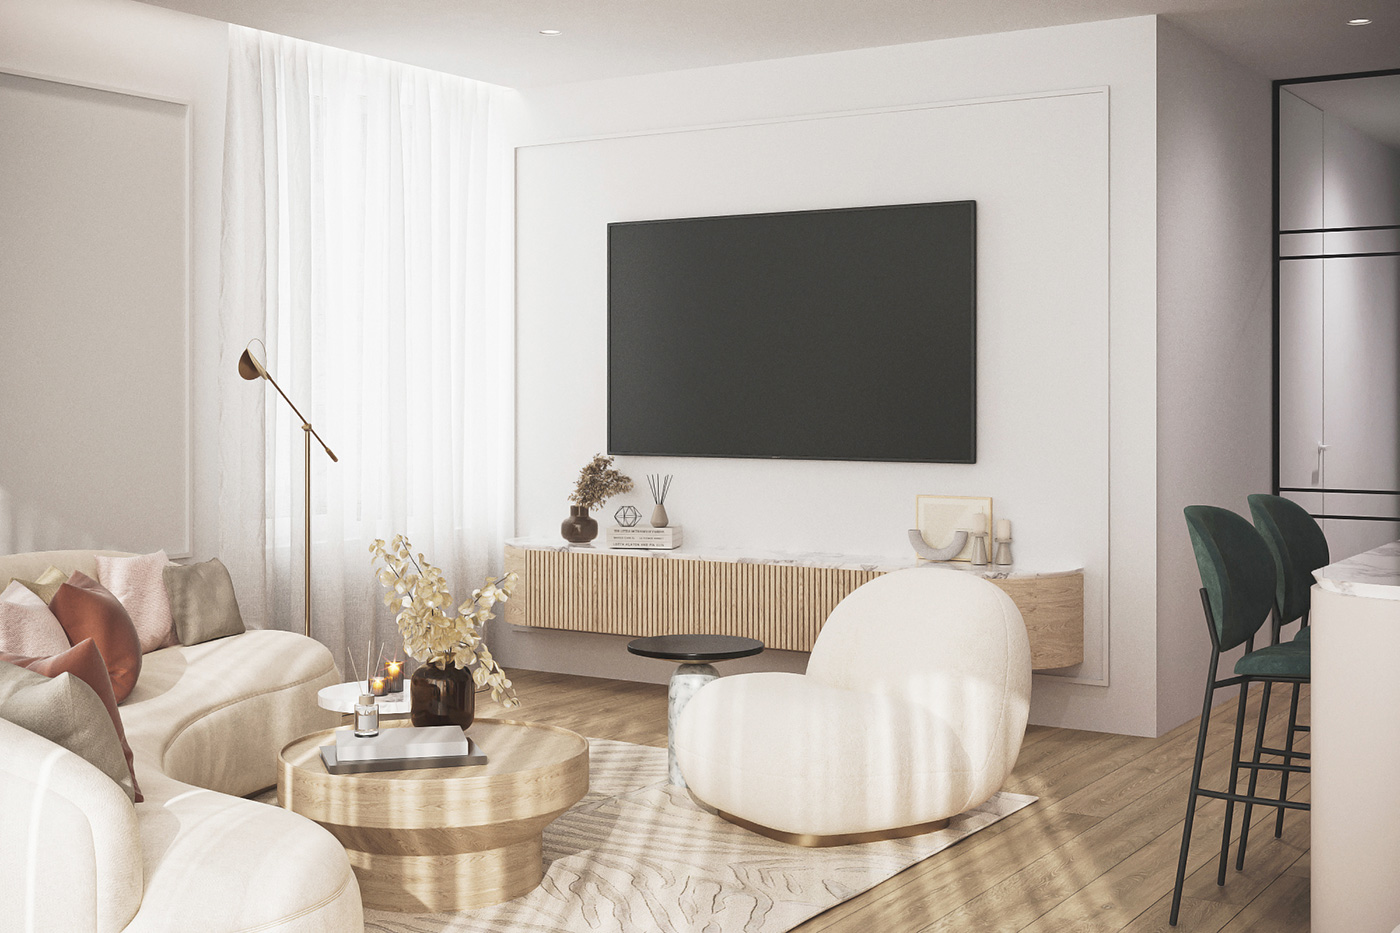 aProstornina | Destino, Apartment interior design | 3D visualisations: Maria Sidorova